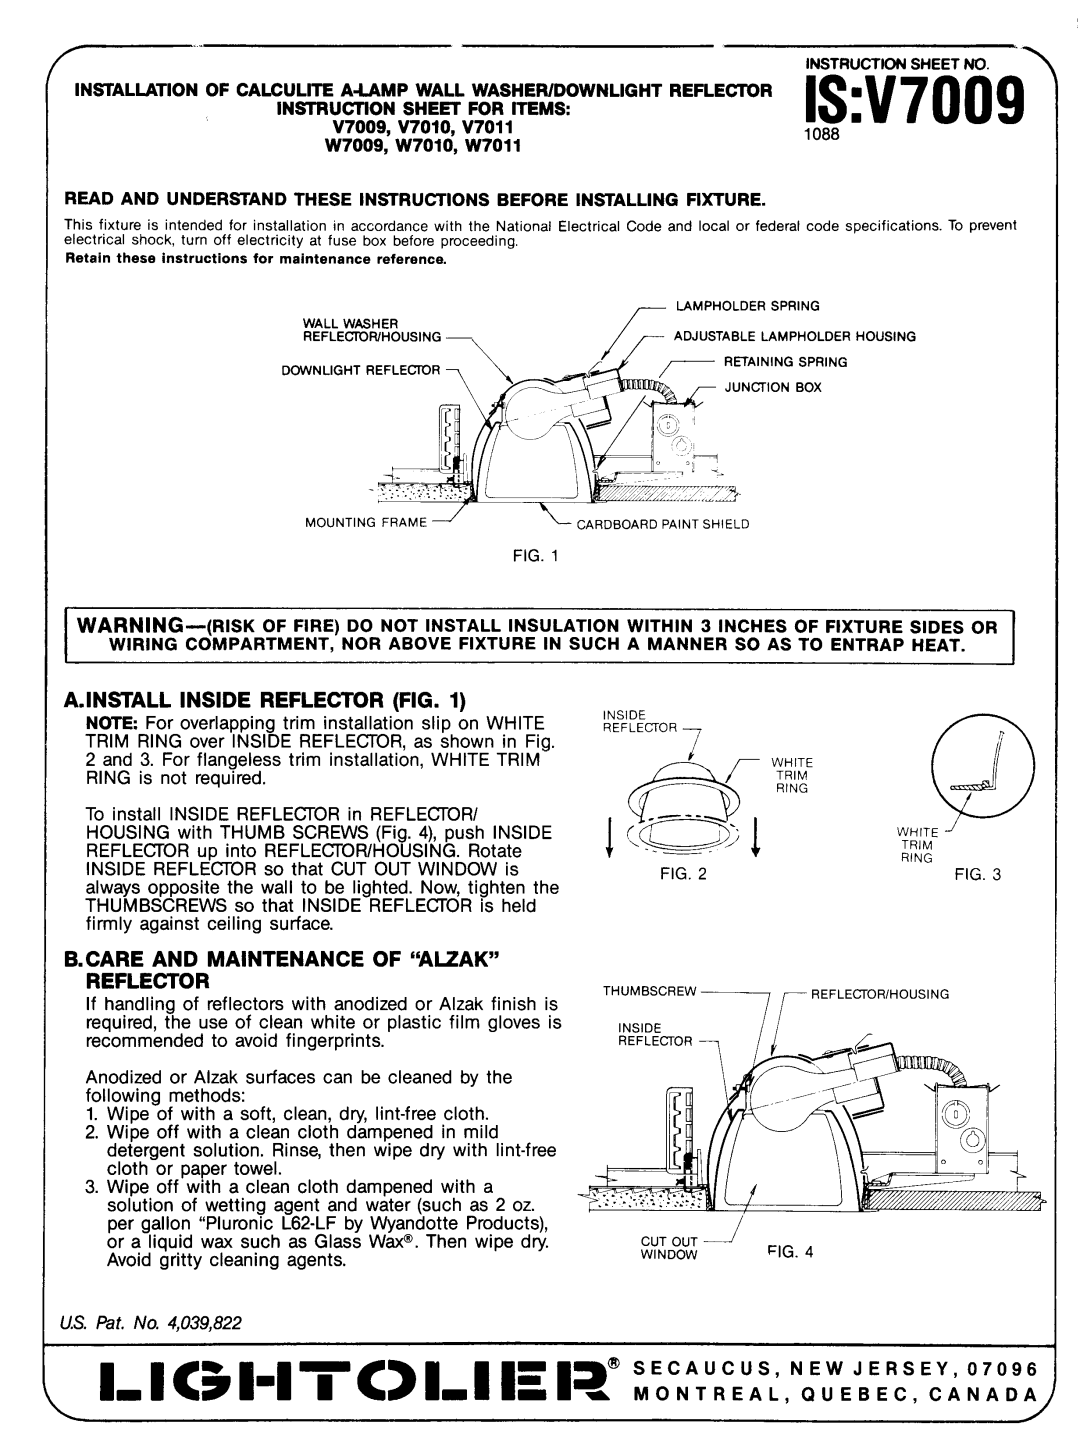 Lightolier W7010 instruction sheet IS V7009I-too, A. Install Inside Reflector Fig, Instruction, U.S. Pat. No. 4,039,822 